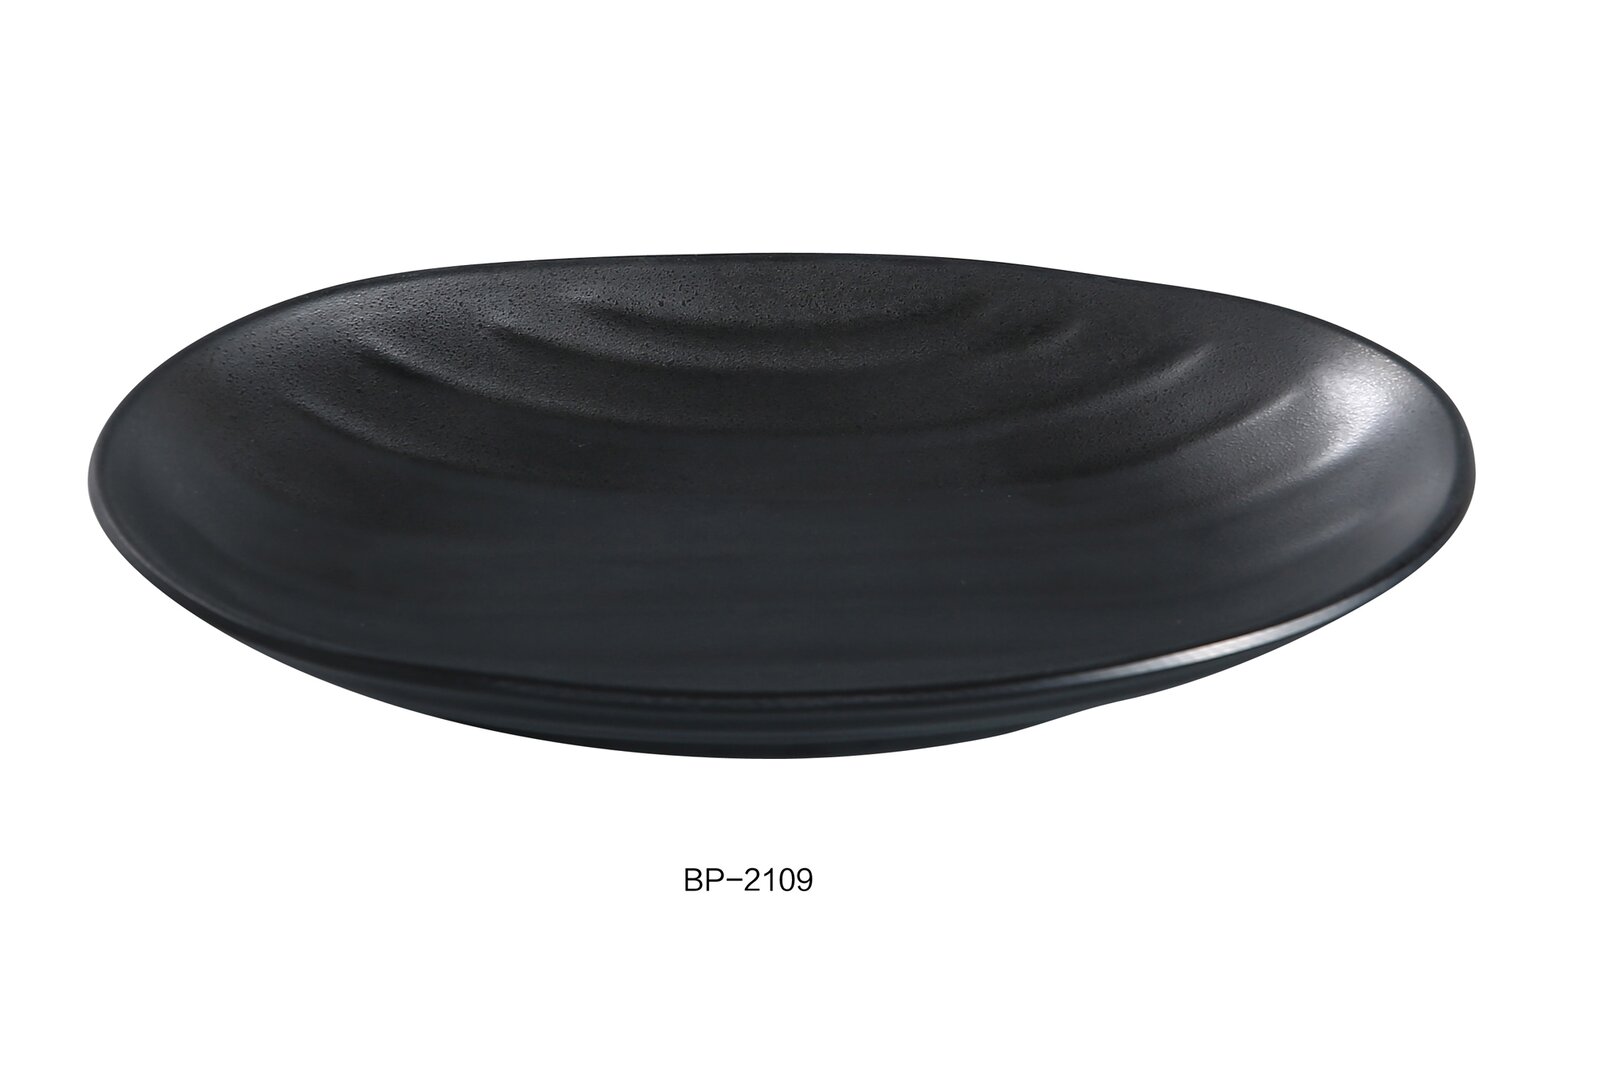 YancoMelamine Yanco BP-2109 Black pearl-1 Oval Deep Plate, 9.5" Diameter, Melamine, Black Color with Matting Finish, Pack of 48